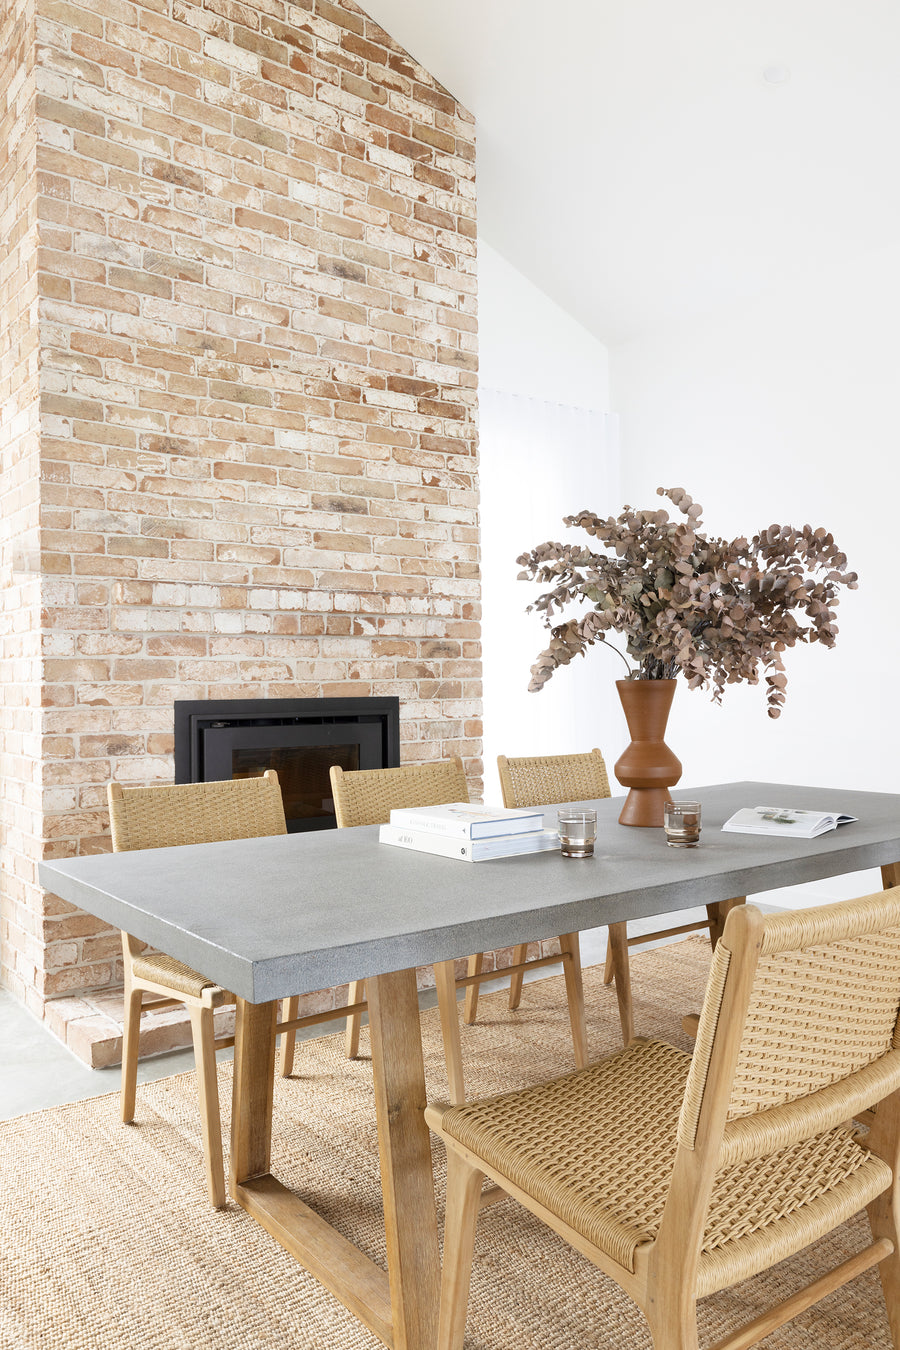 2.4m Sierra Rectangular Dining Table | Speckled Grey with Light Honey Acacia Wood Legs - www.elkstone.com.au